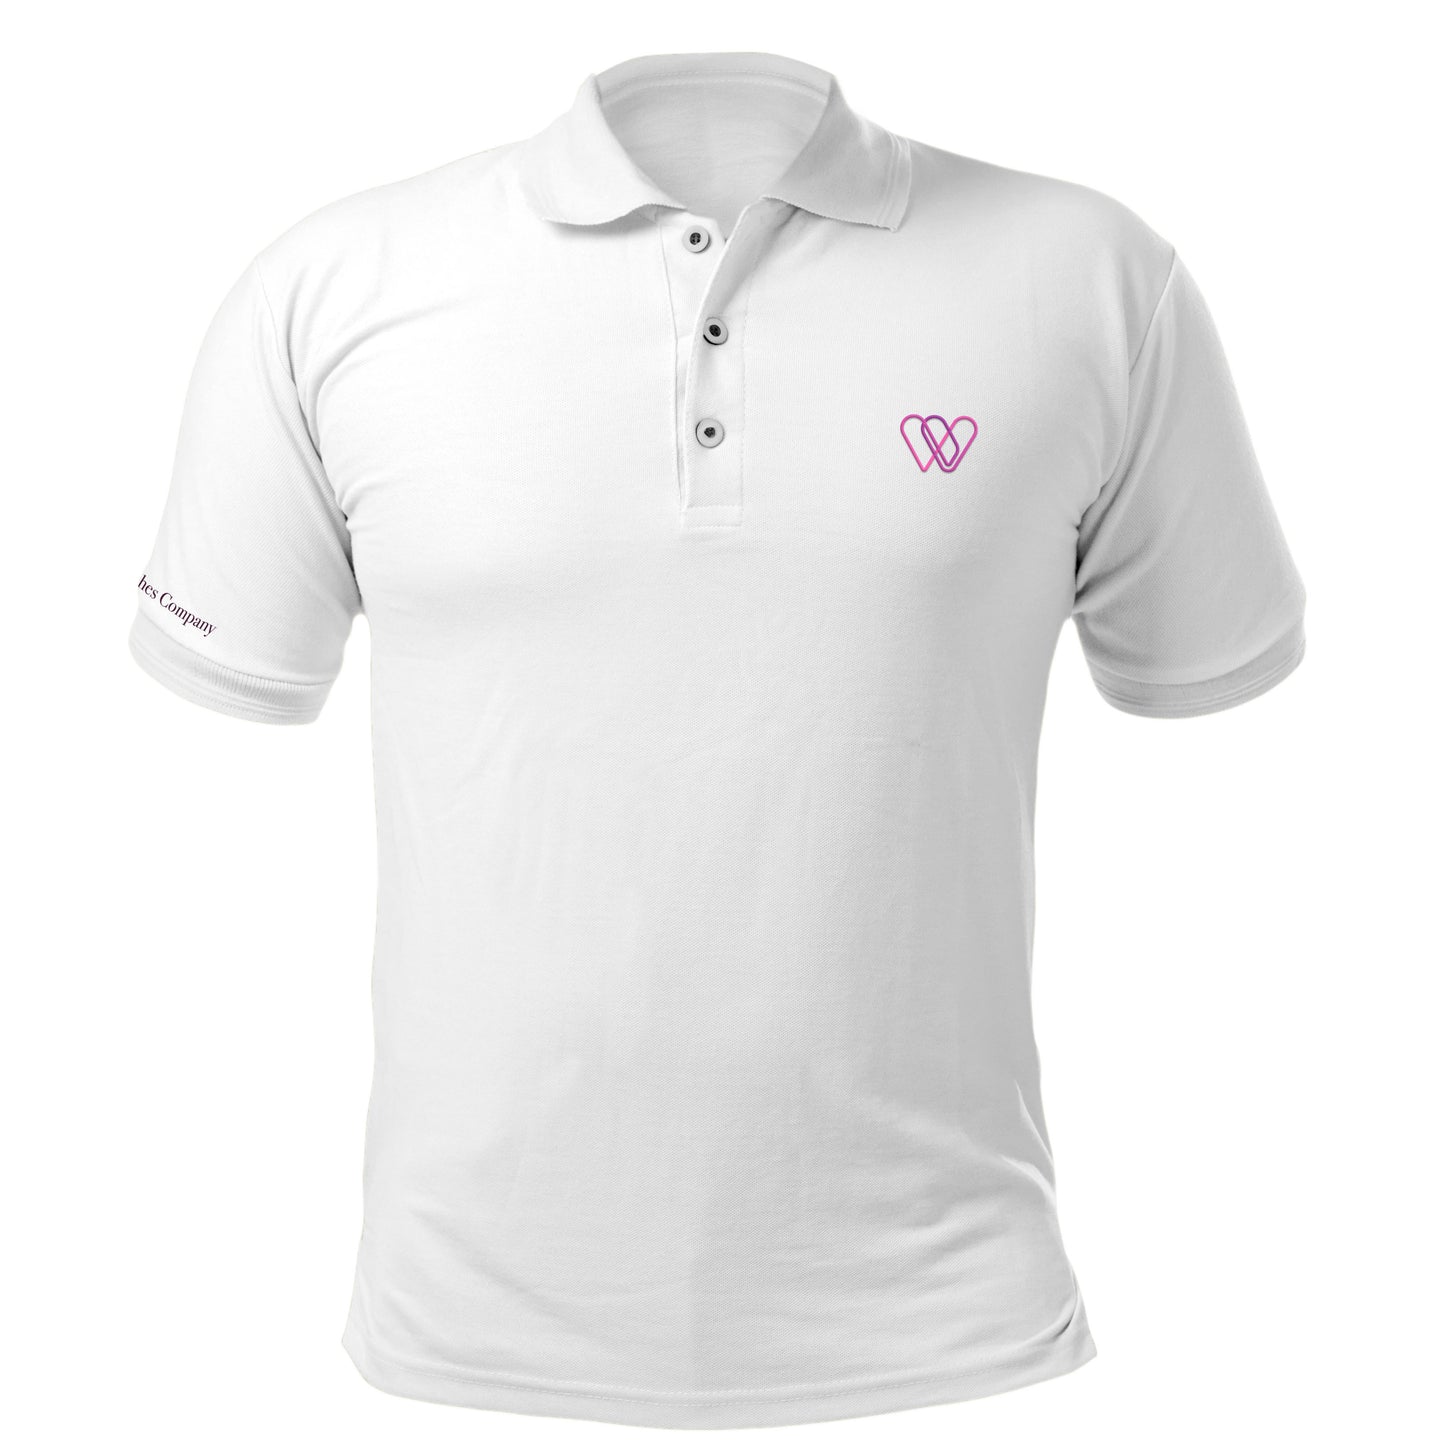 The Wishes Company - White Polo shirt